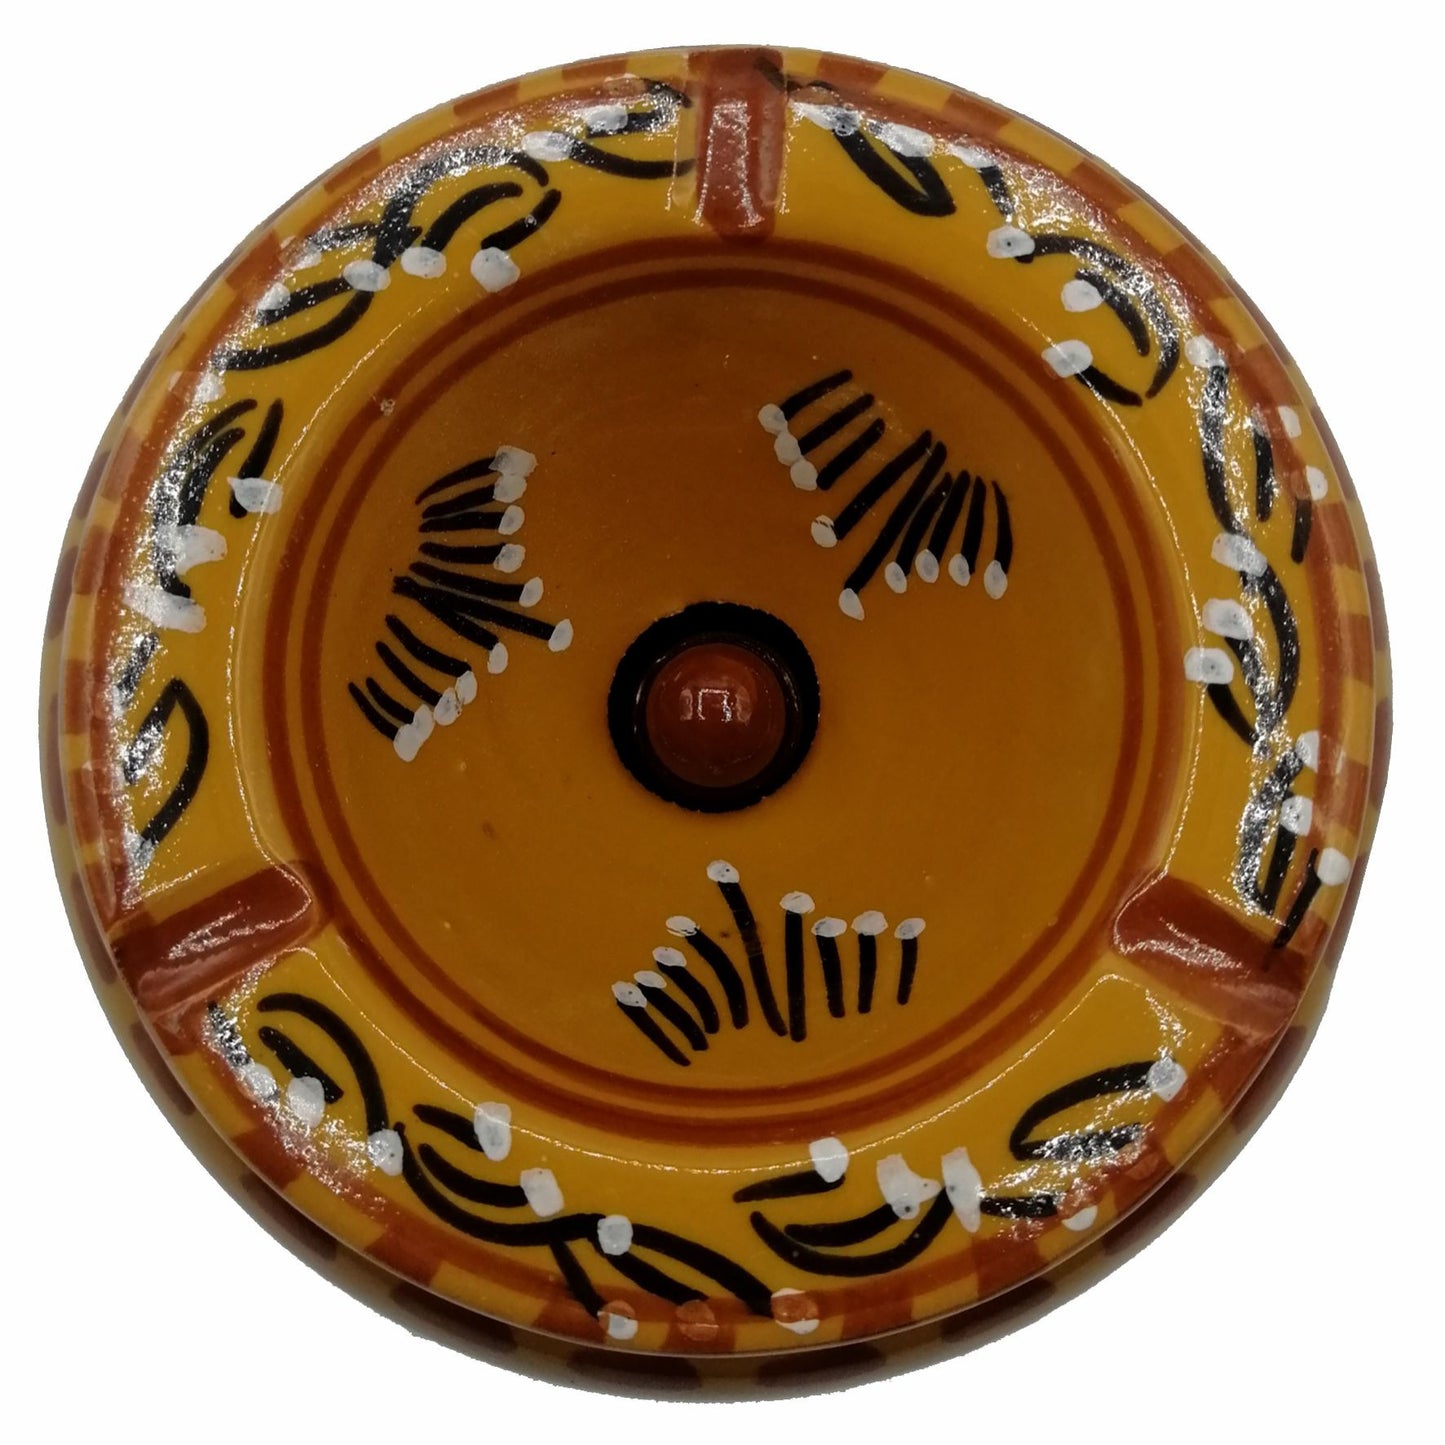 Etnico Arredo Posacenere Ceramica Antiodore Tunisina Marocchine 1011200814